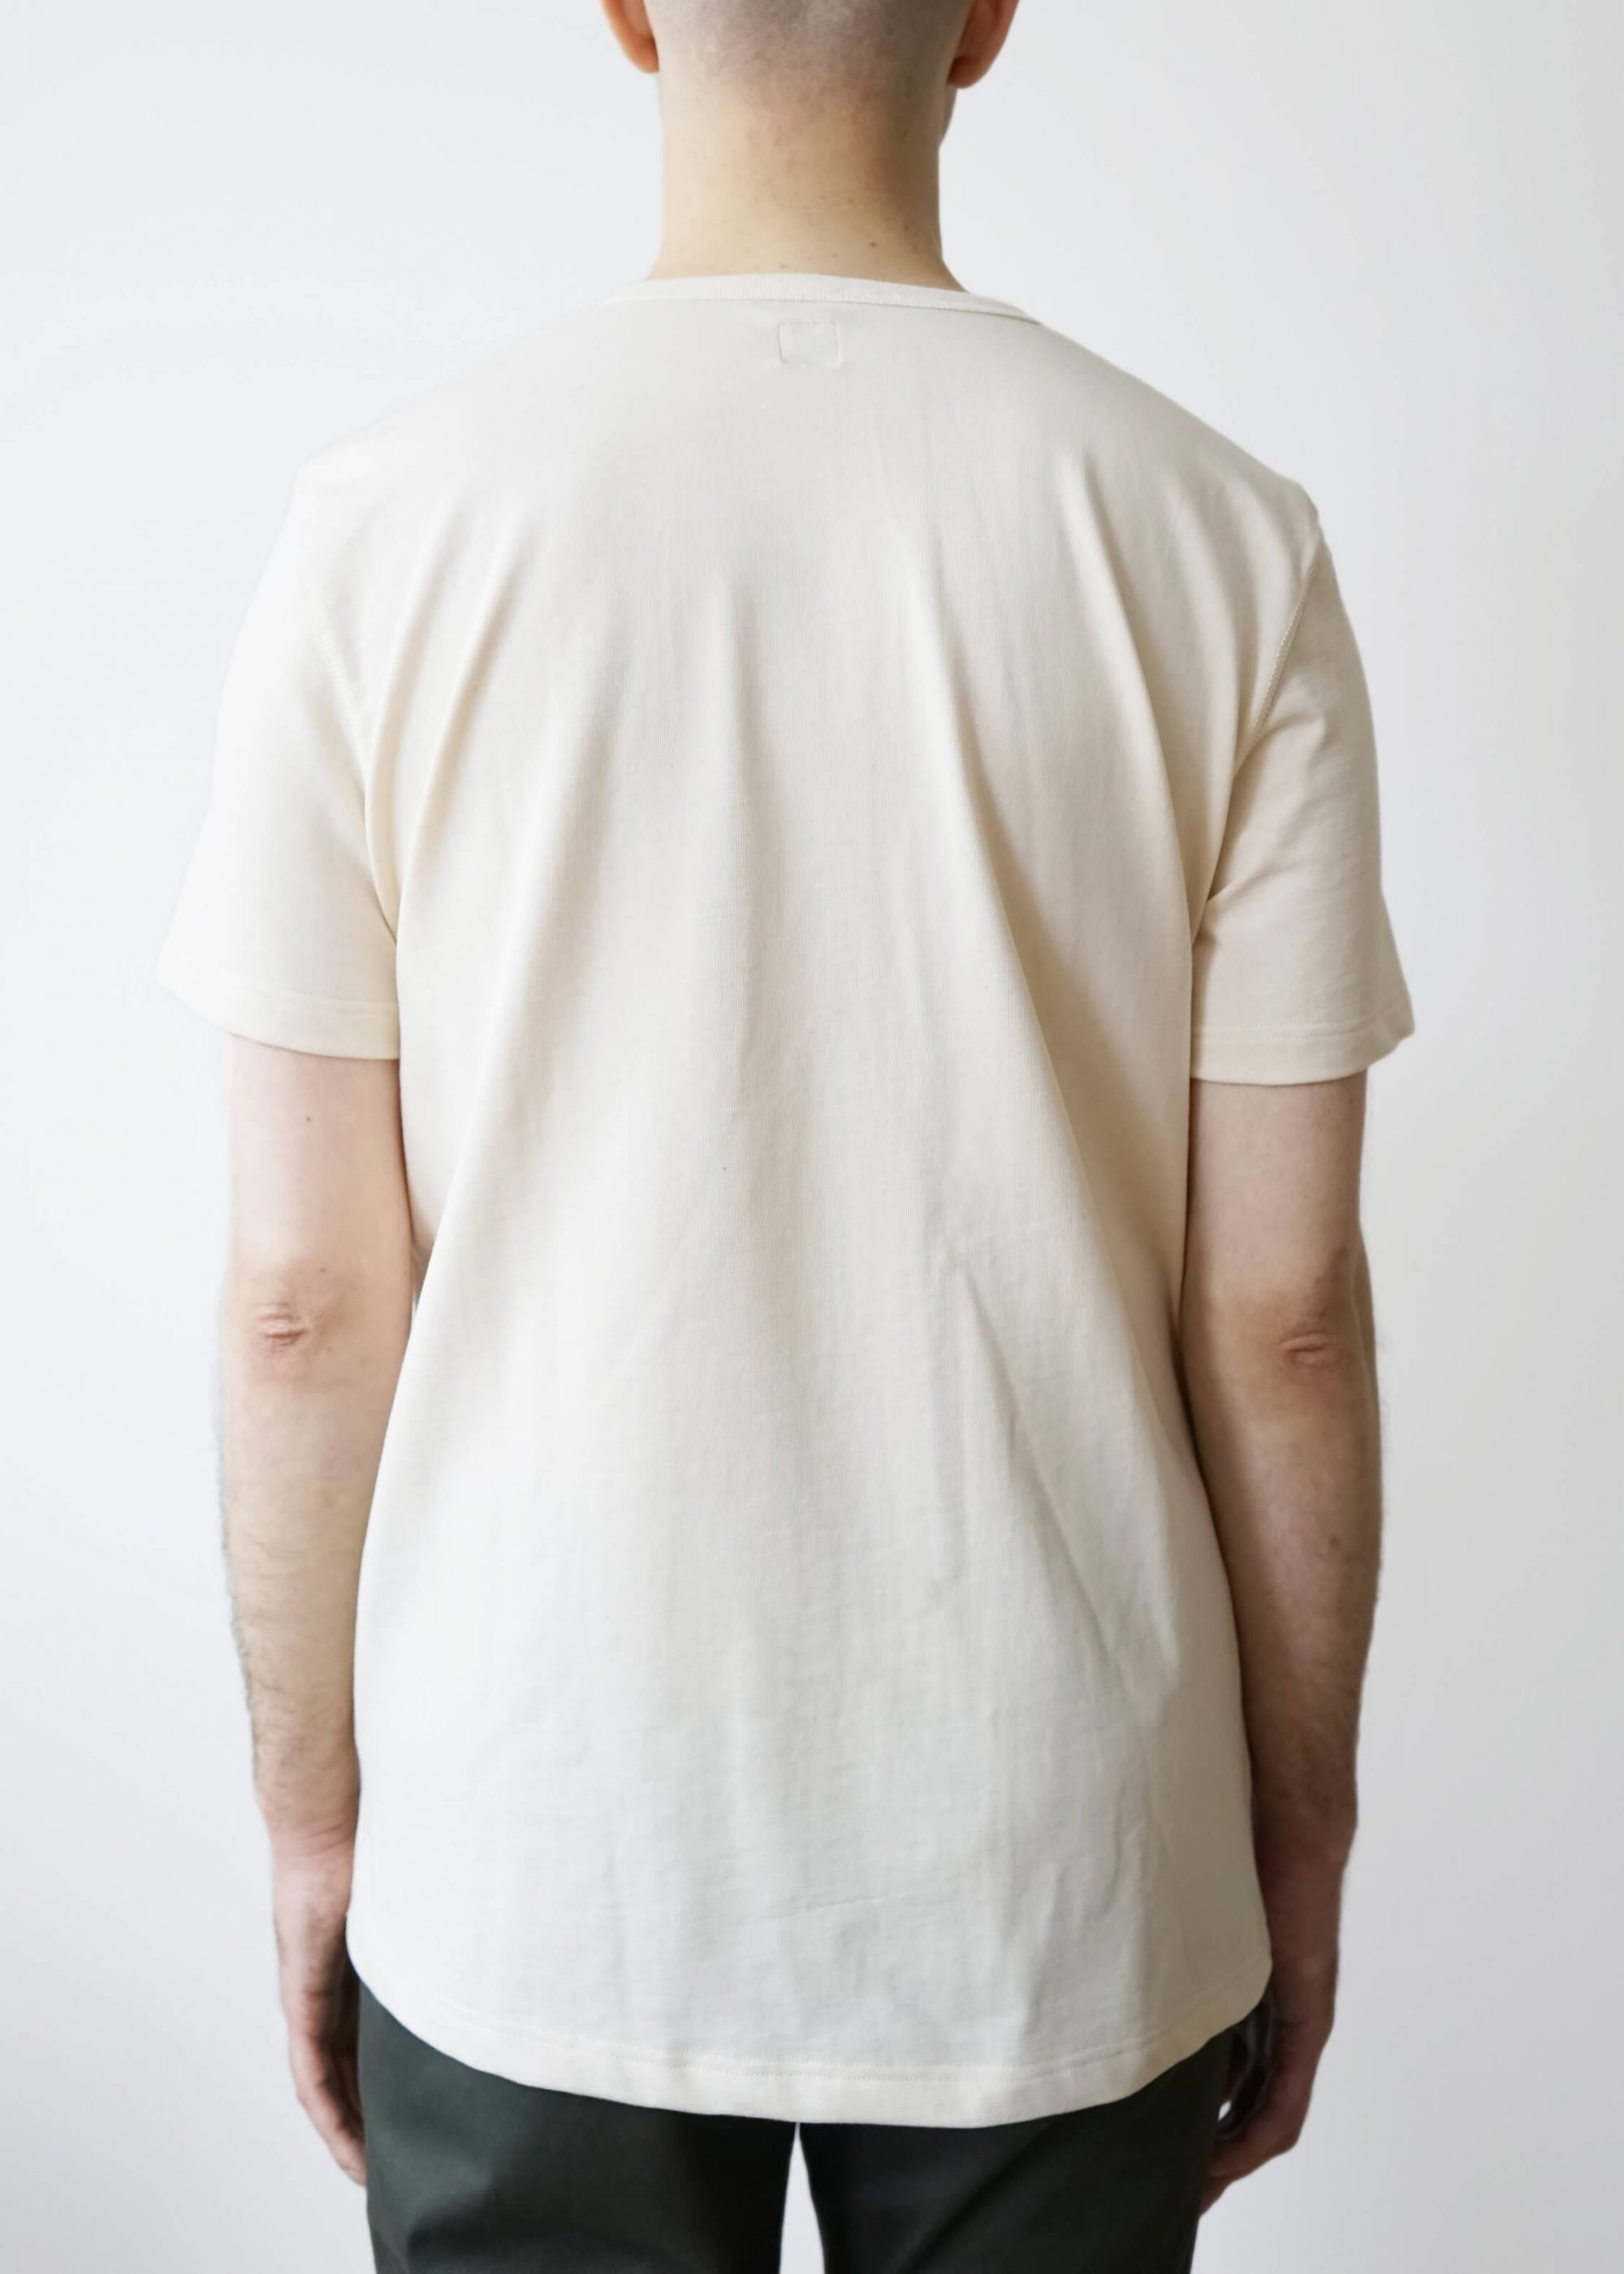 Product image for »Gréco« Ecru Ringer T-Shirt 100% Organic Cotton